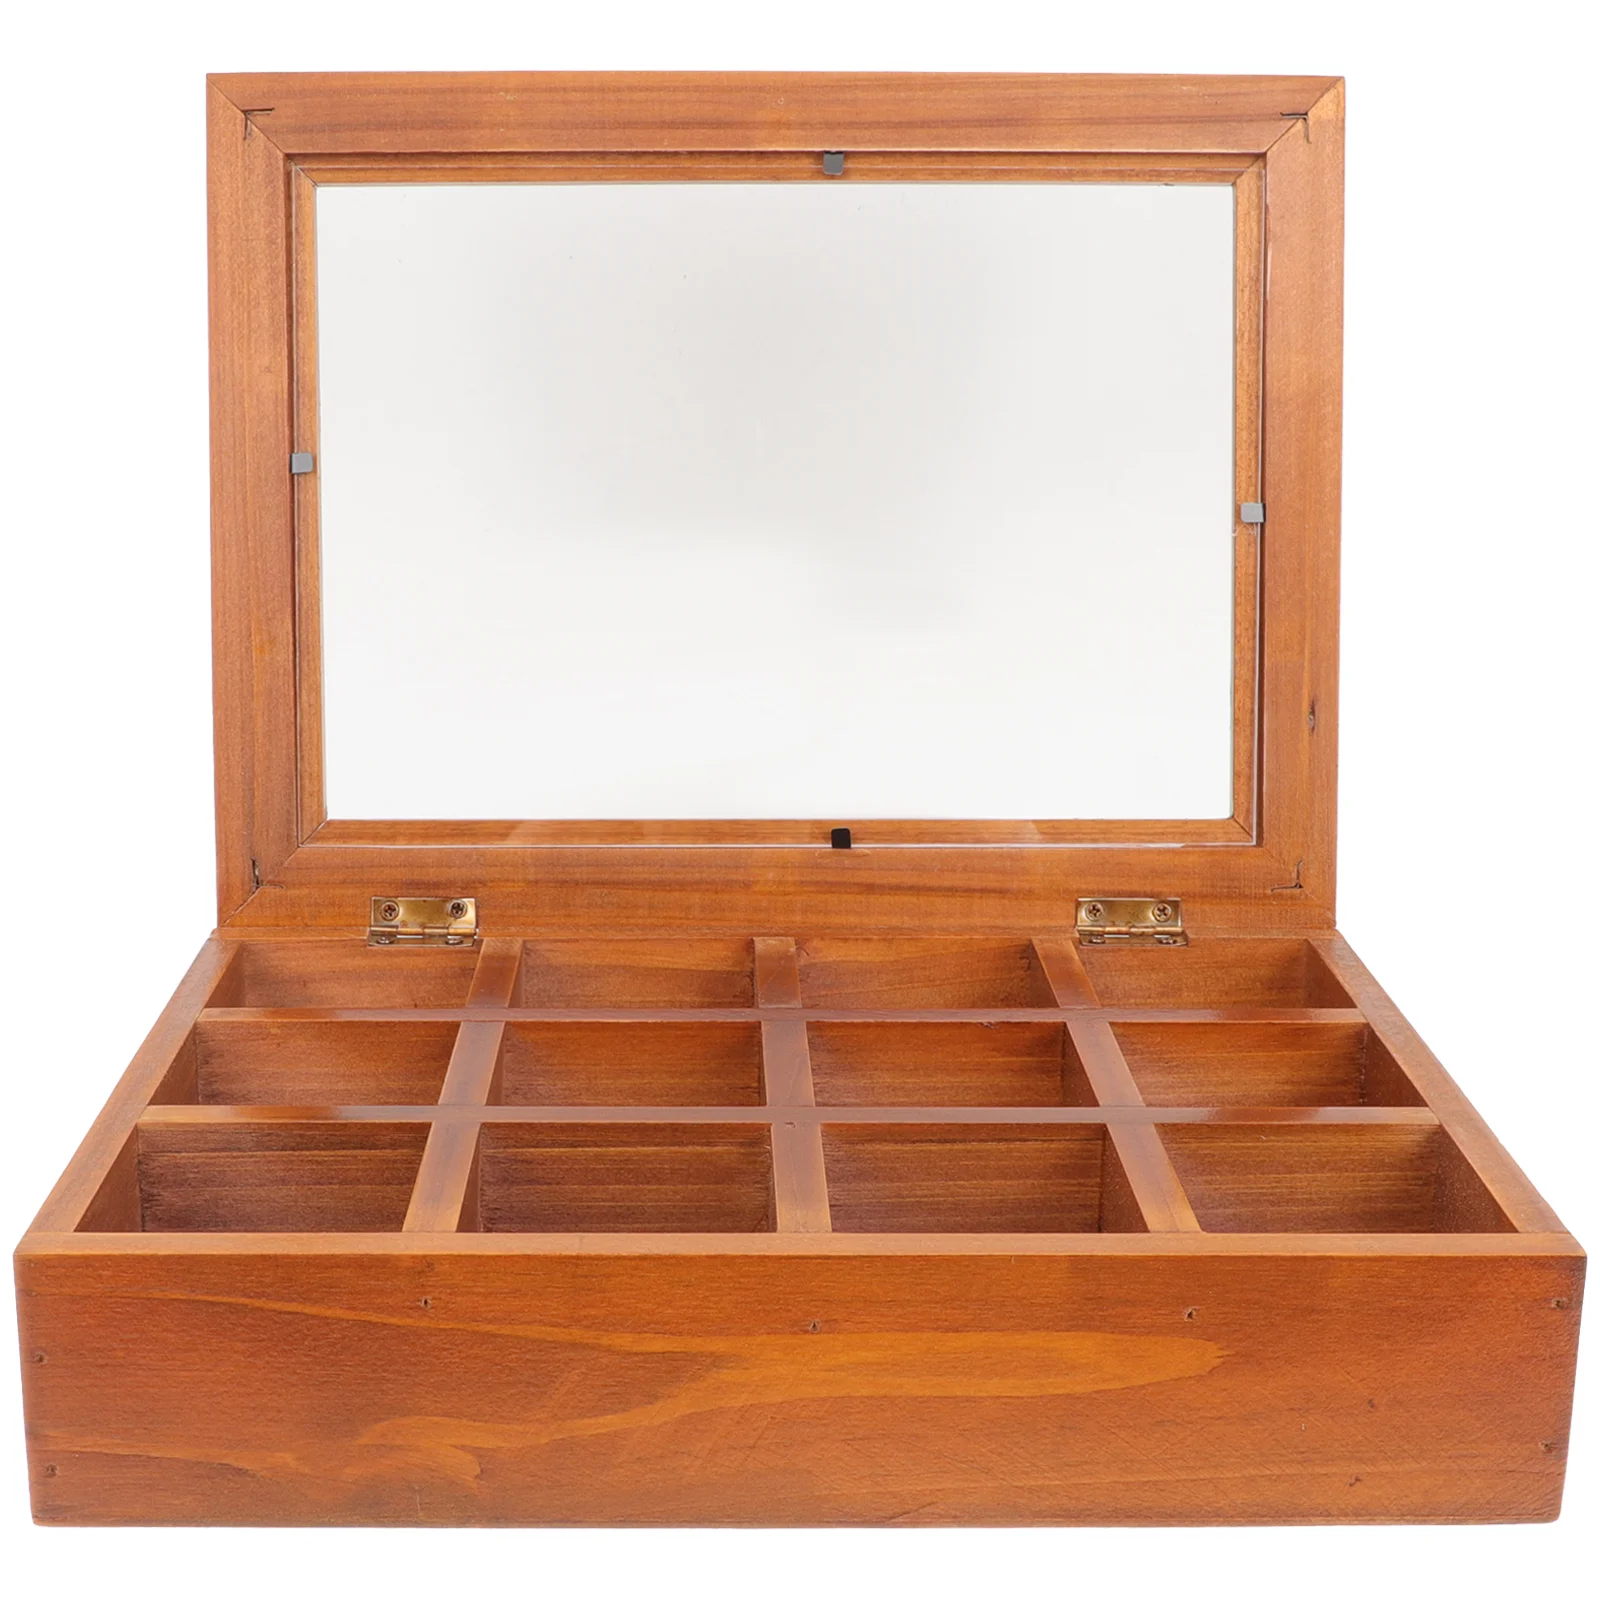 

Earring Holder Organizer Vintage Storage Box Jewelry Trays Portable Organizing Case Organiser